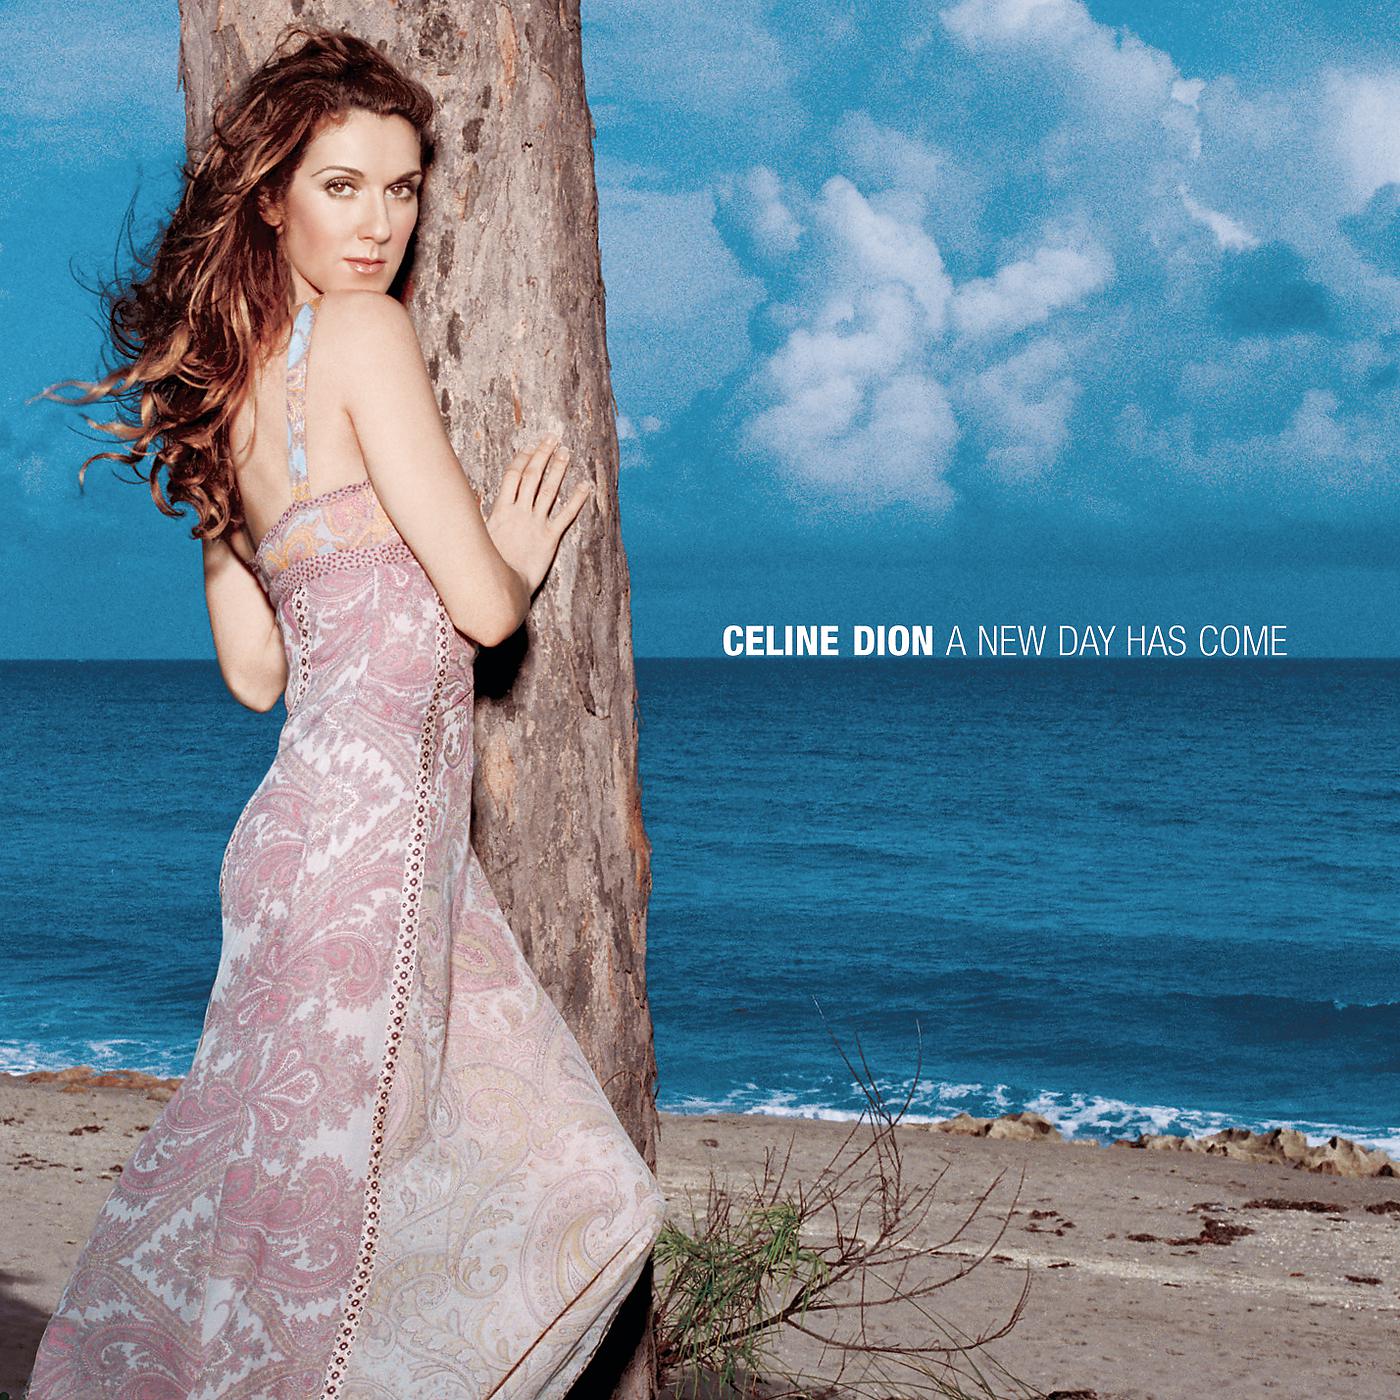 New days come celine dion. Celine Dion 2002 a New Day has come. A New Day has come Céline Dion album. A New Day has come Céline Dion album Cover. Céline Dion - a New Day has come (2002).